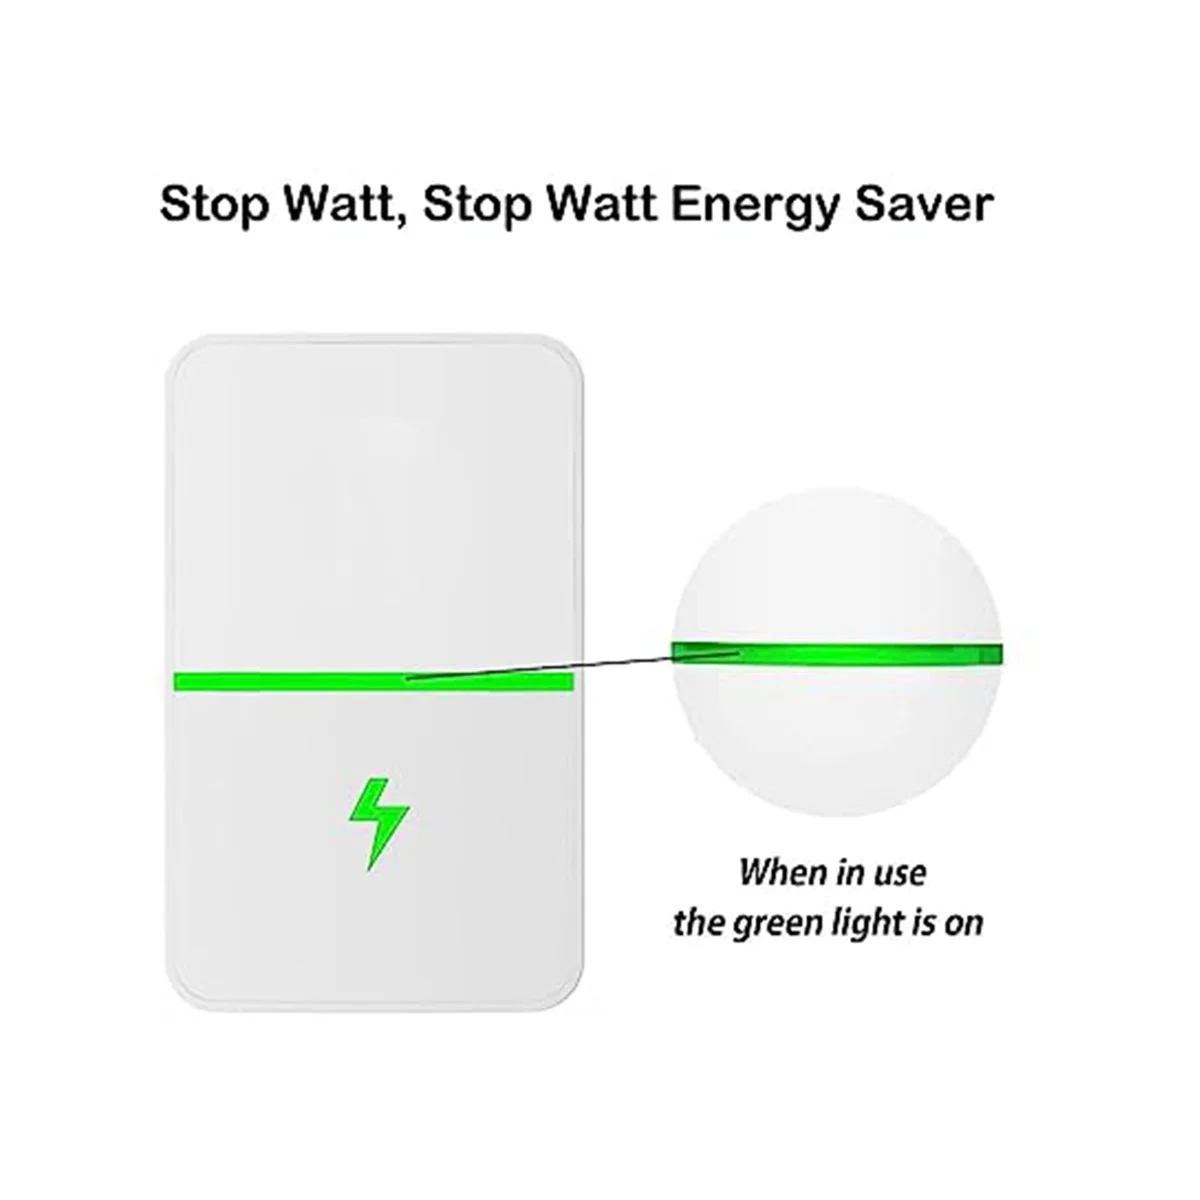 https://ae01.alicdn.com/kf/Sbdb8dd0e8ab34e9189fb75aef16070f8Y/Stopwatt-Energy-Saving-Device-Stopwatt-Energy-Saver-Stop-Watt-Energy-Saver-Stop-Watt-Energy-Saver-5Pcs.jpg